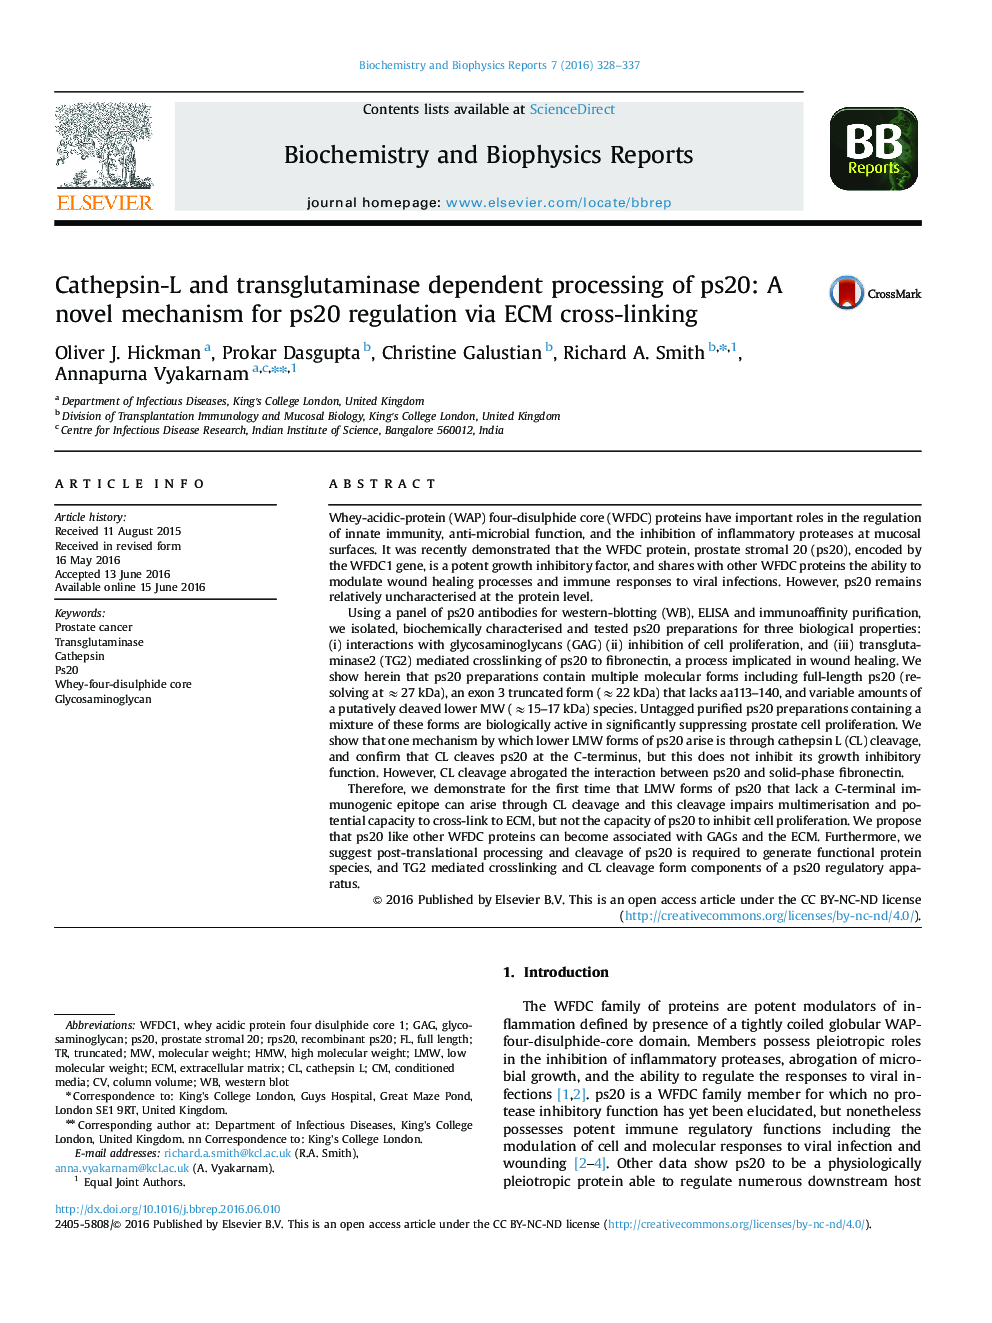 Cathepsin-L and transglutaminase dependent processing of ps20: A novel mechanism for ps20 regulation via ECM cross-linking